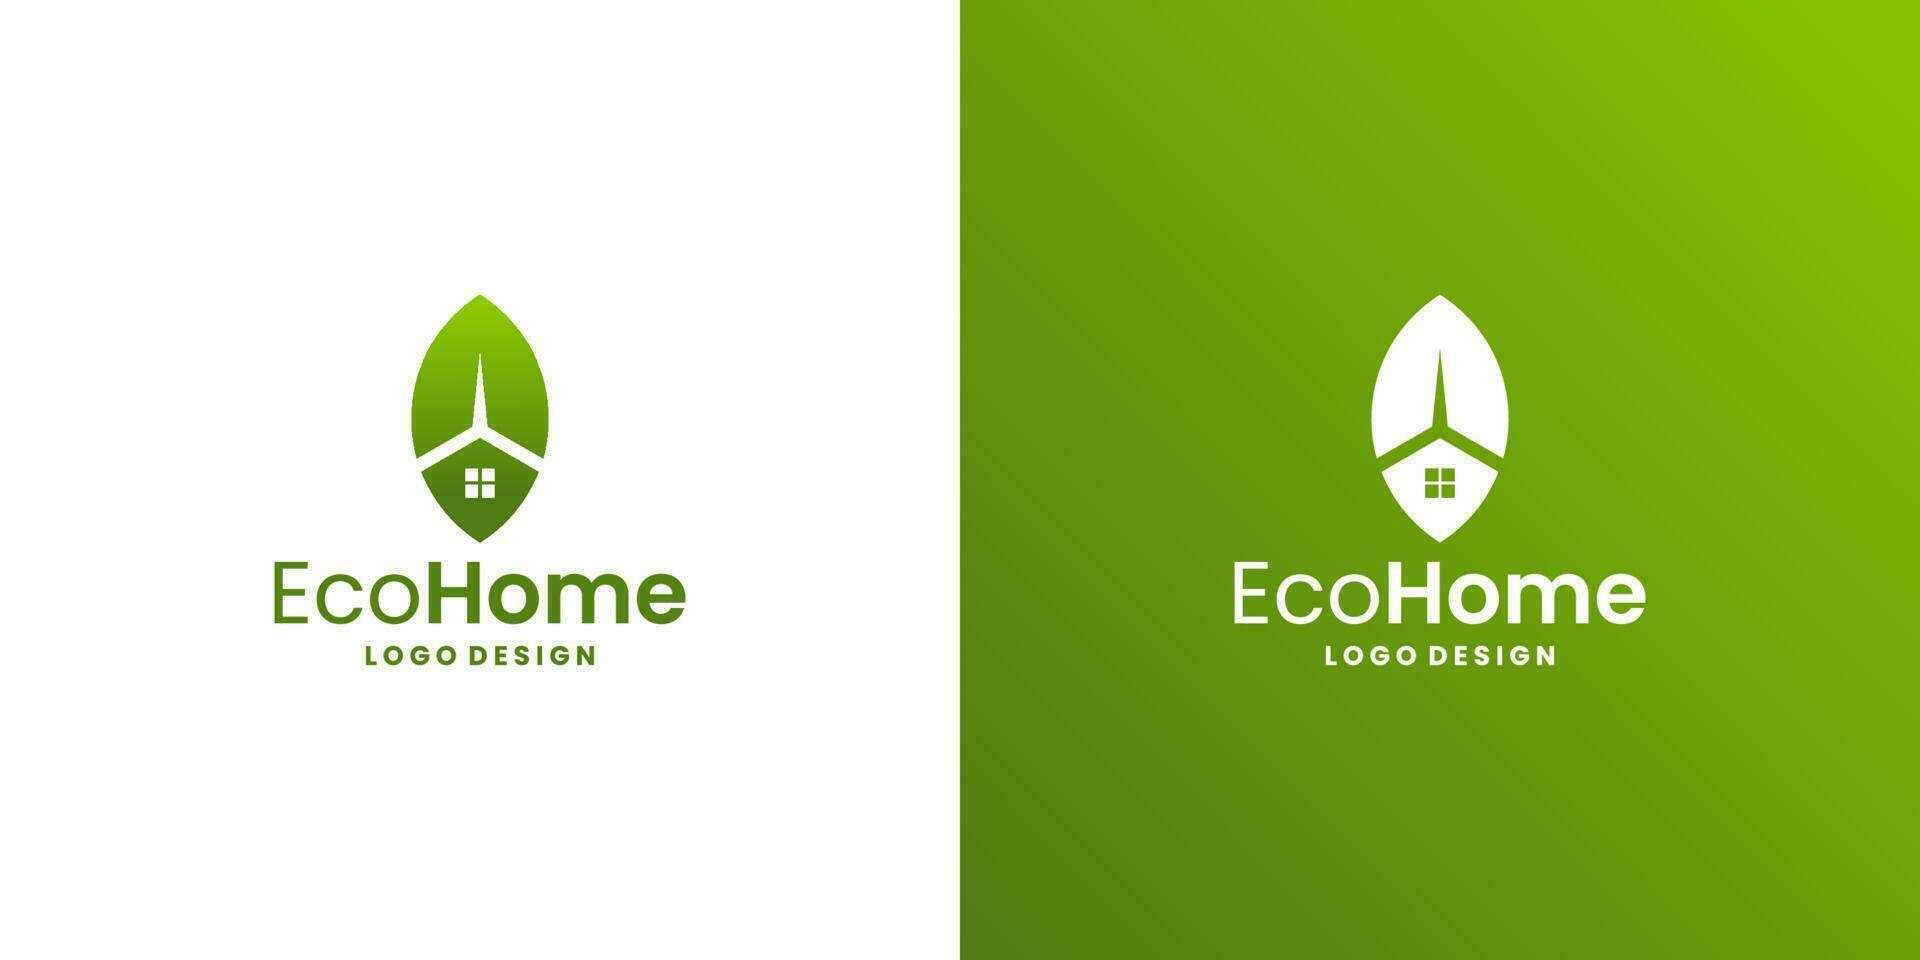 eco home logo design. vector illustration.